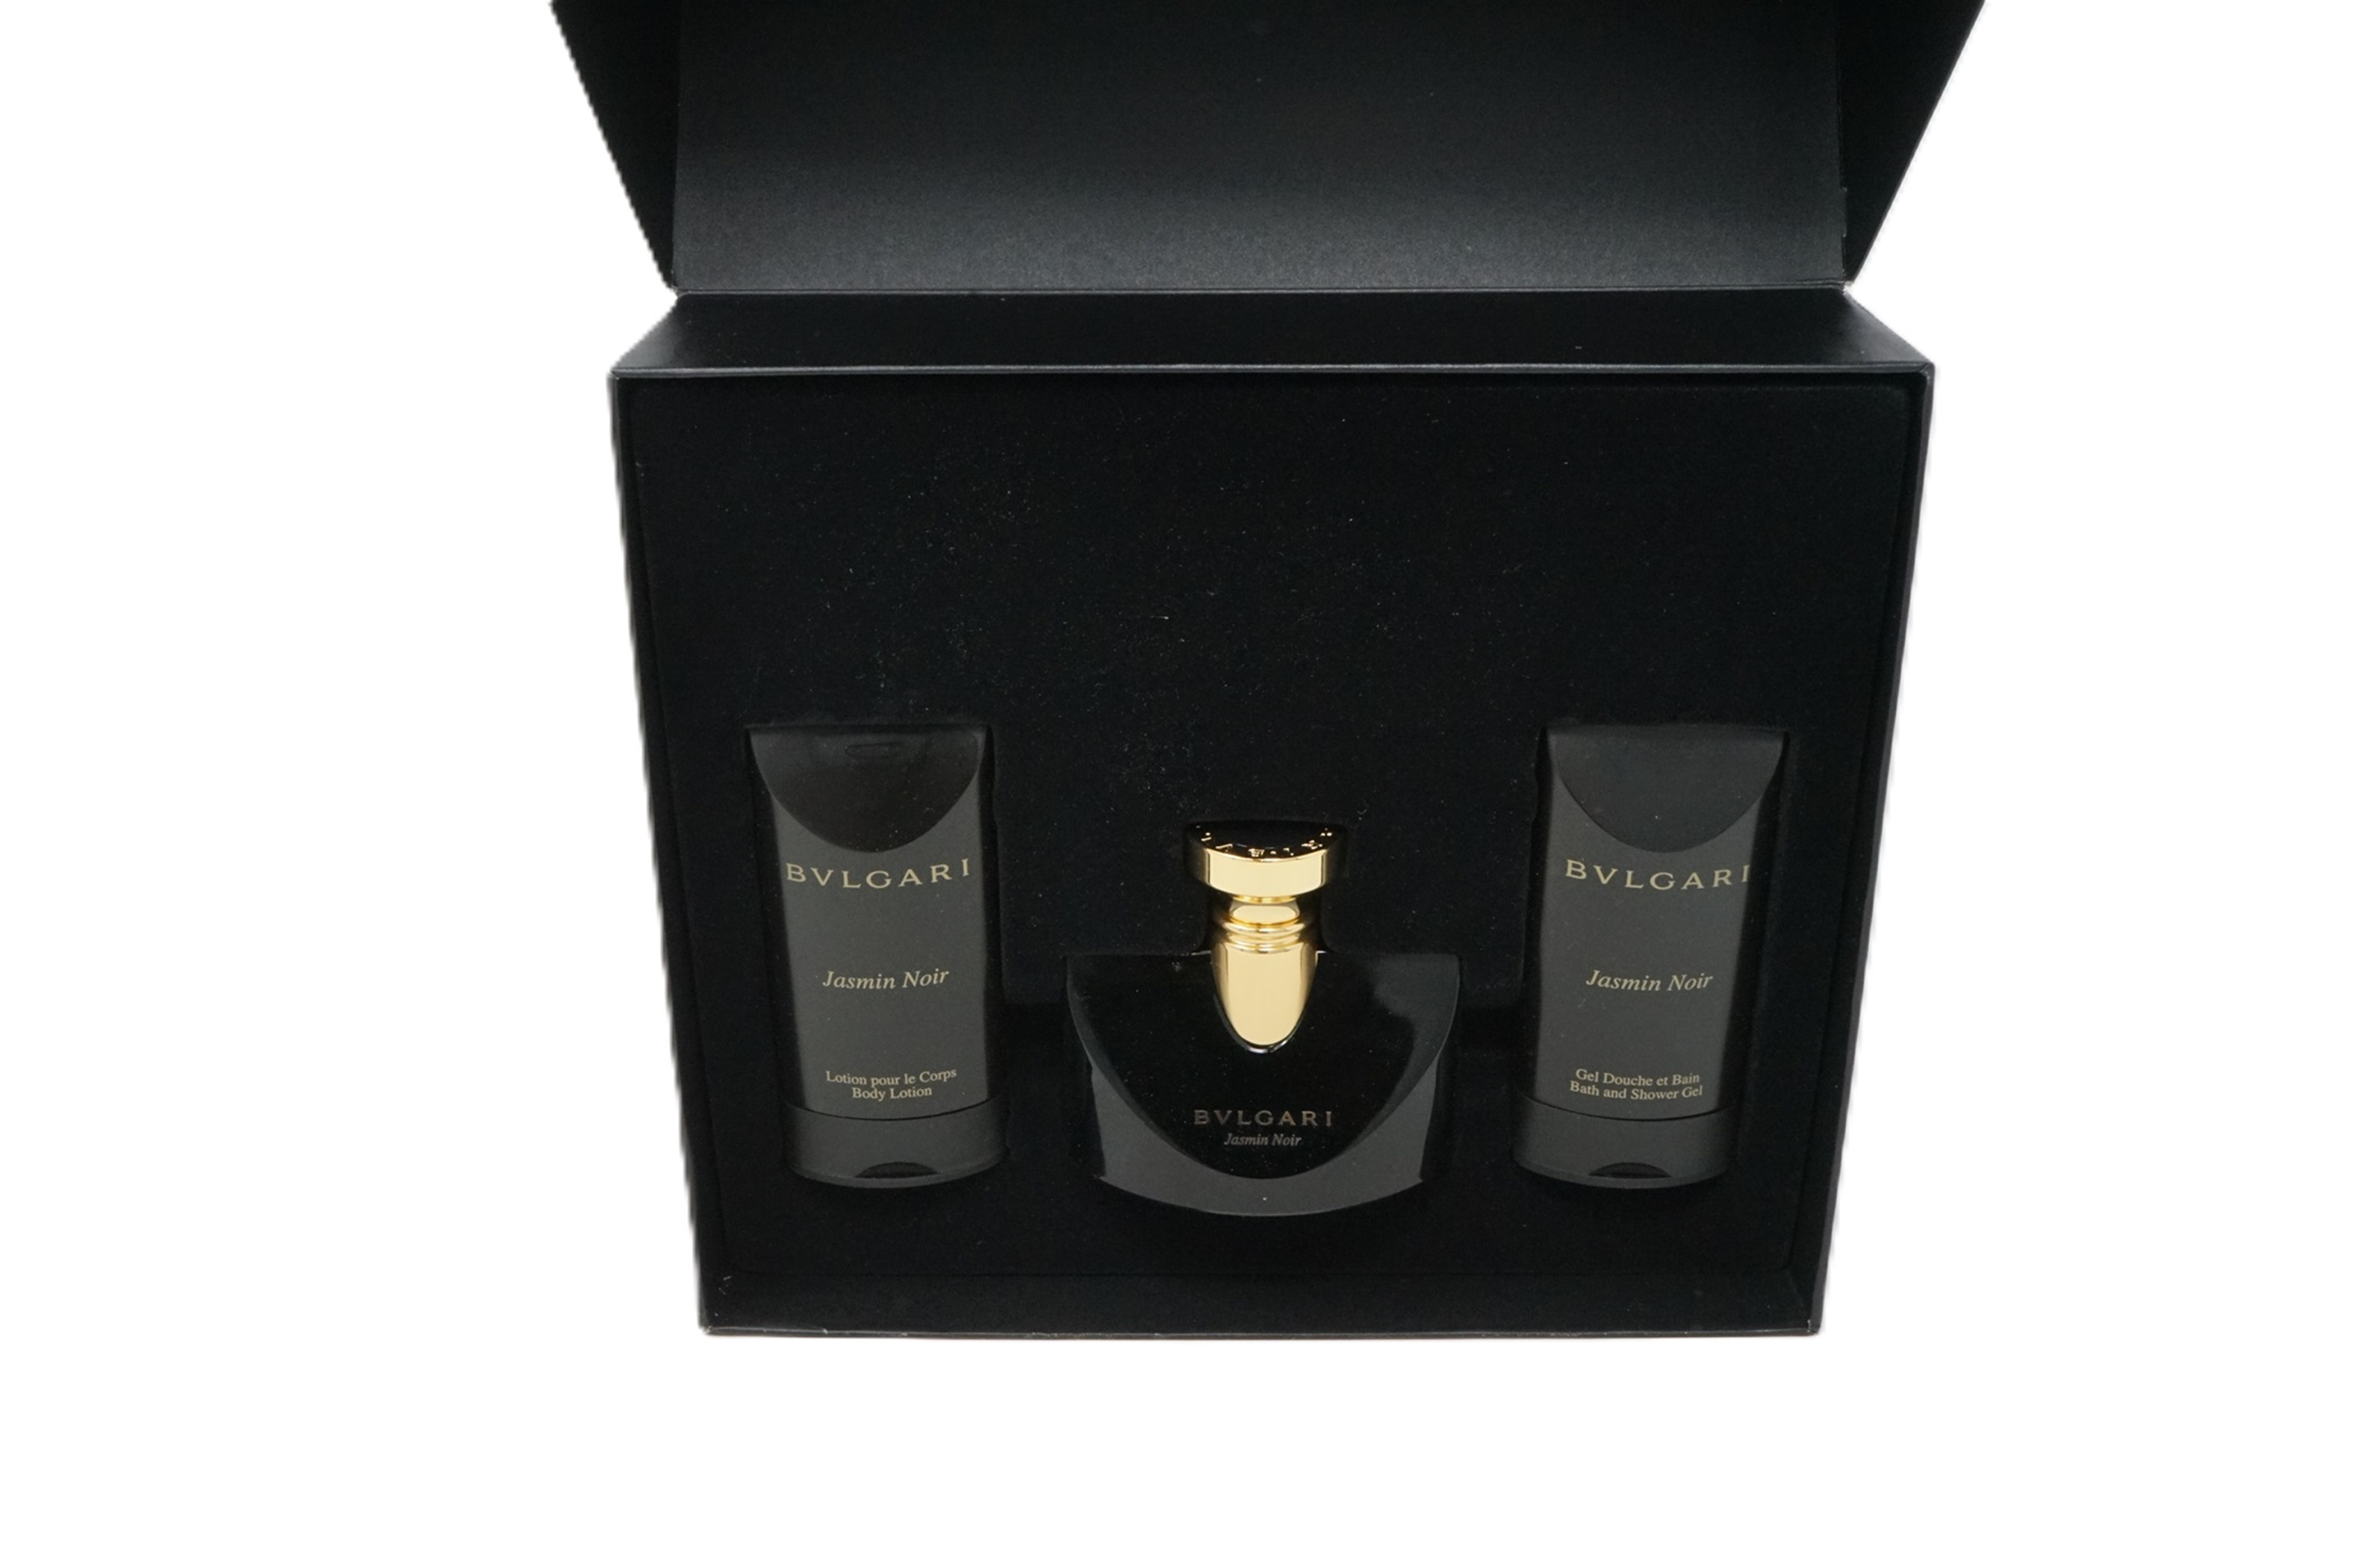 Bvlgari Jasmin Noir Eau de Parfum Spray 50ml + Body Lotion 75 ml + Shower Gel 75ml